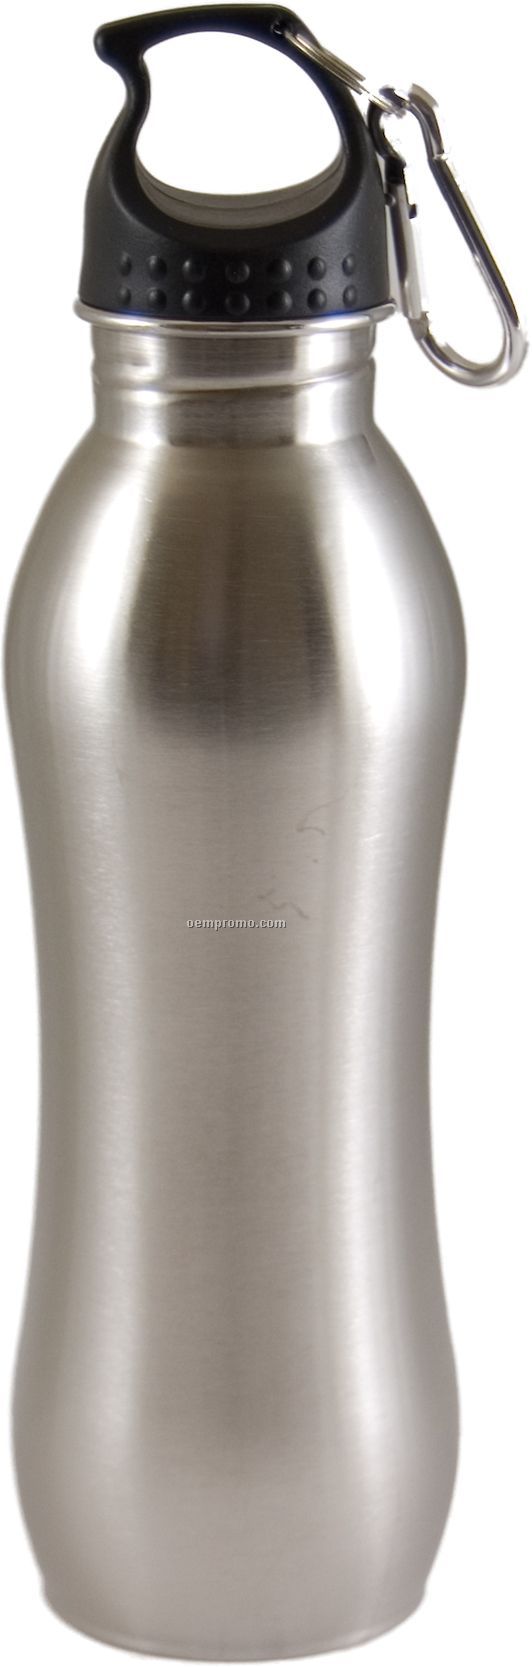 24 Oz. Summit Stainless Steel Bottle